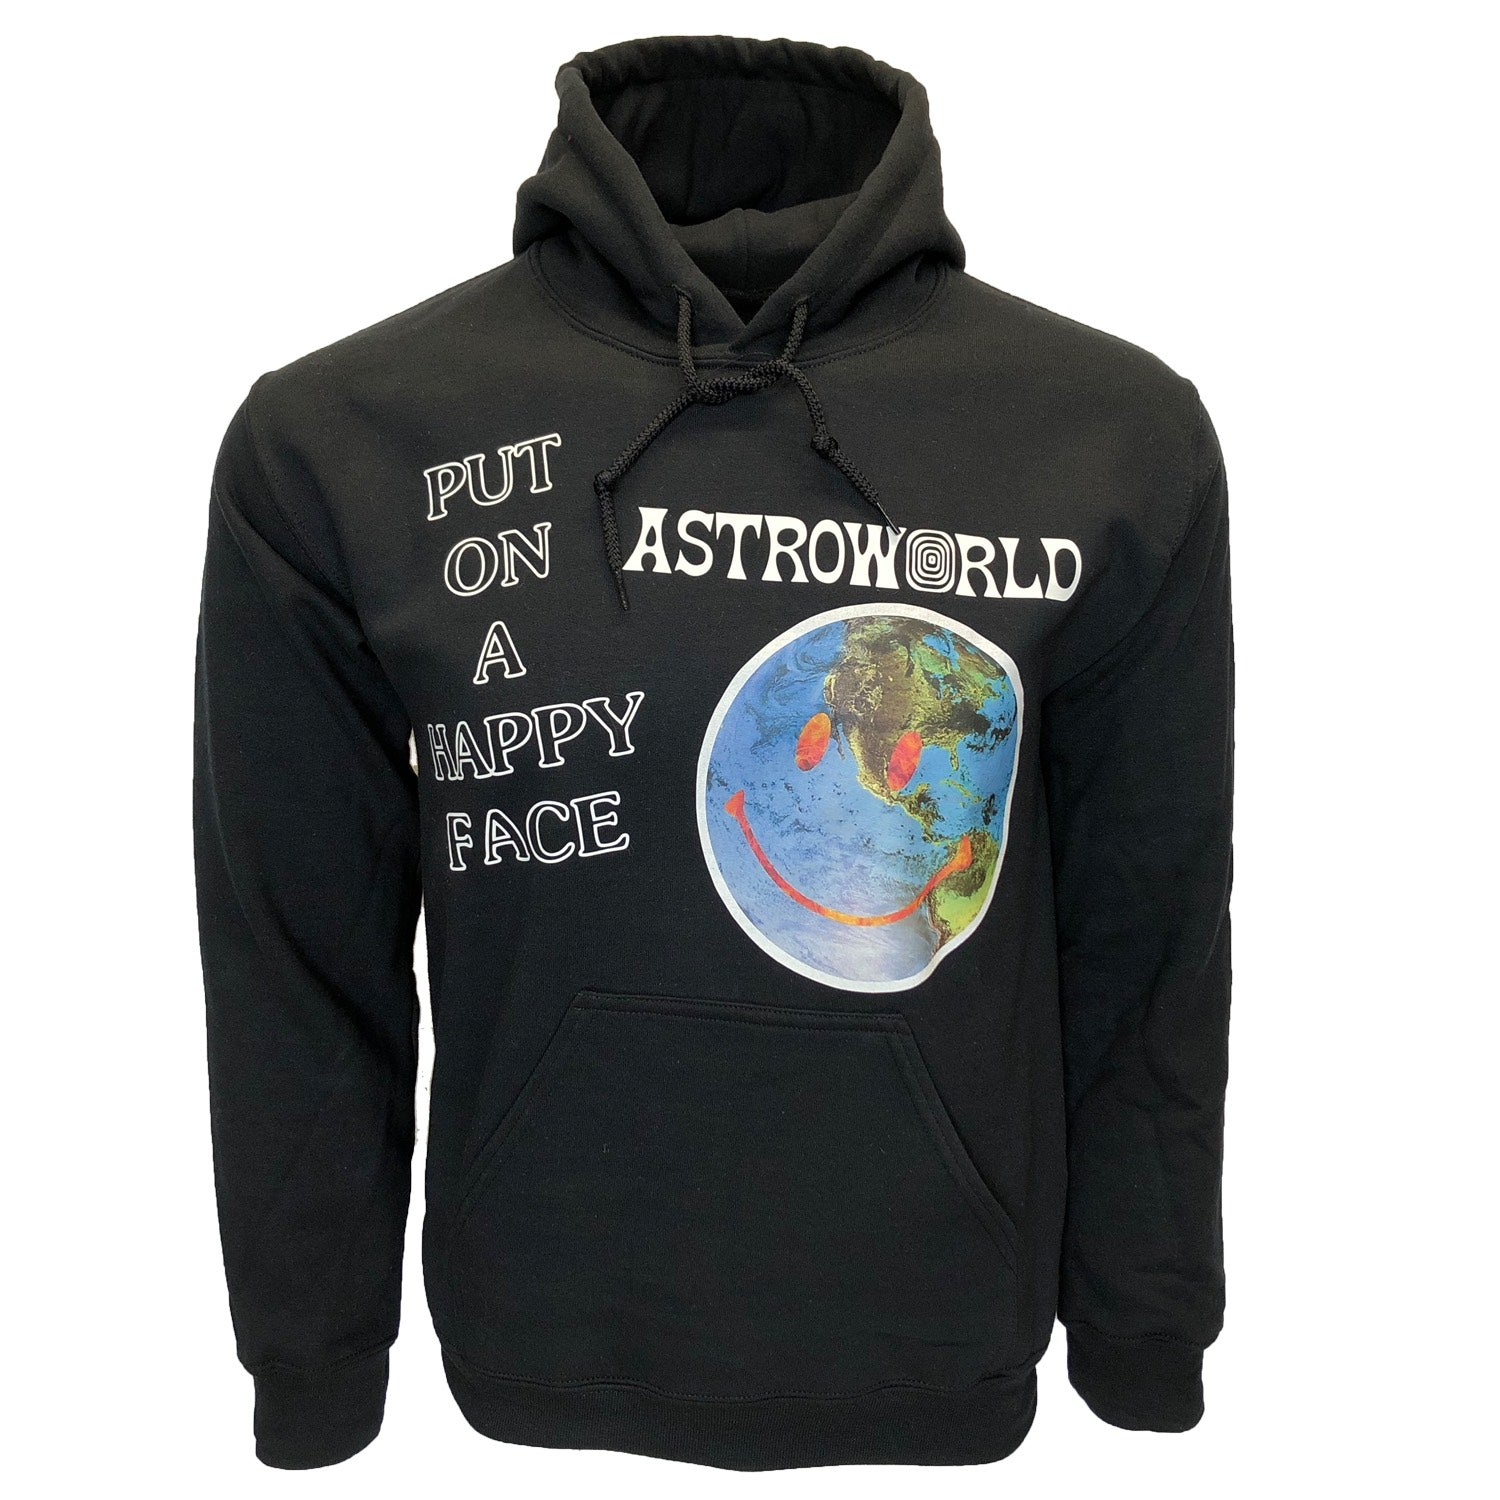 astroworld hoodie cheap